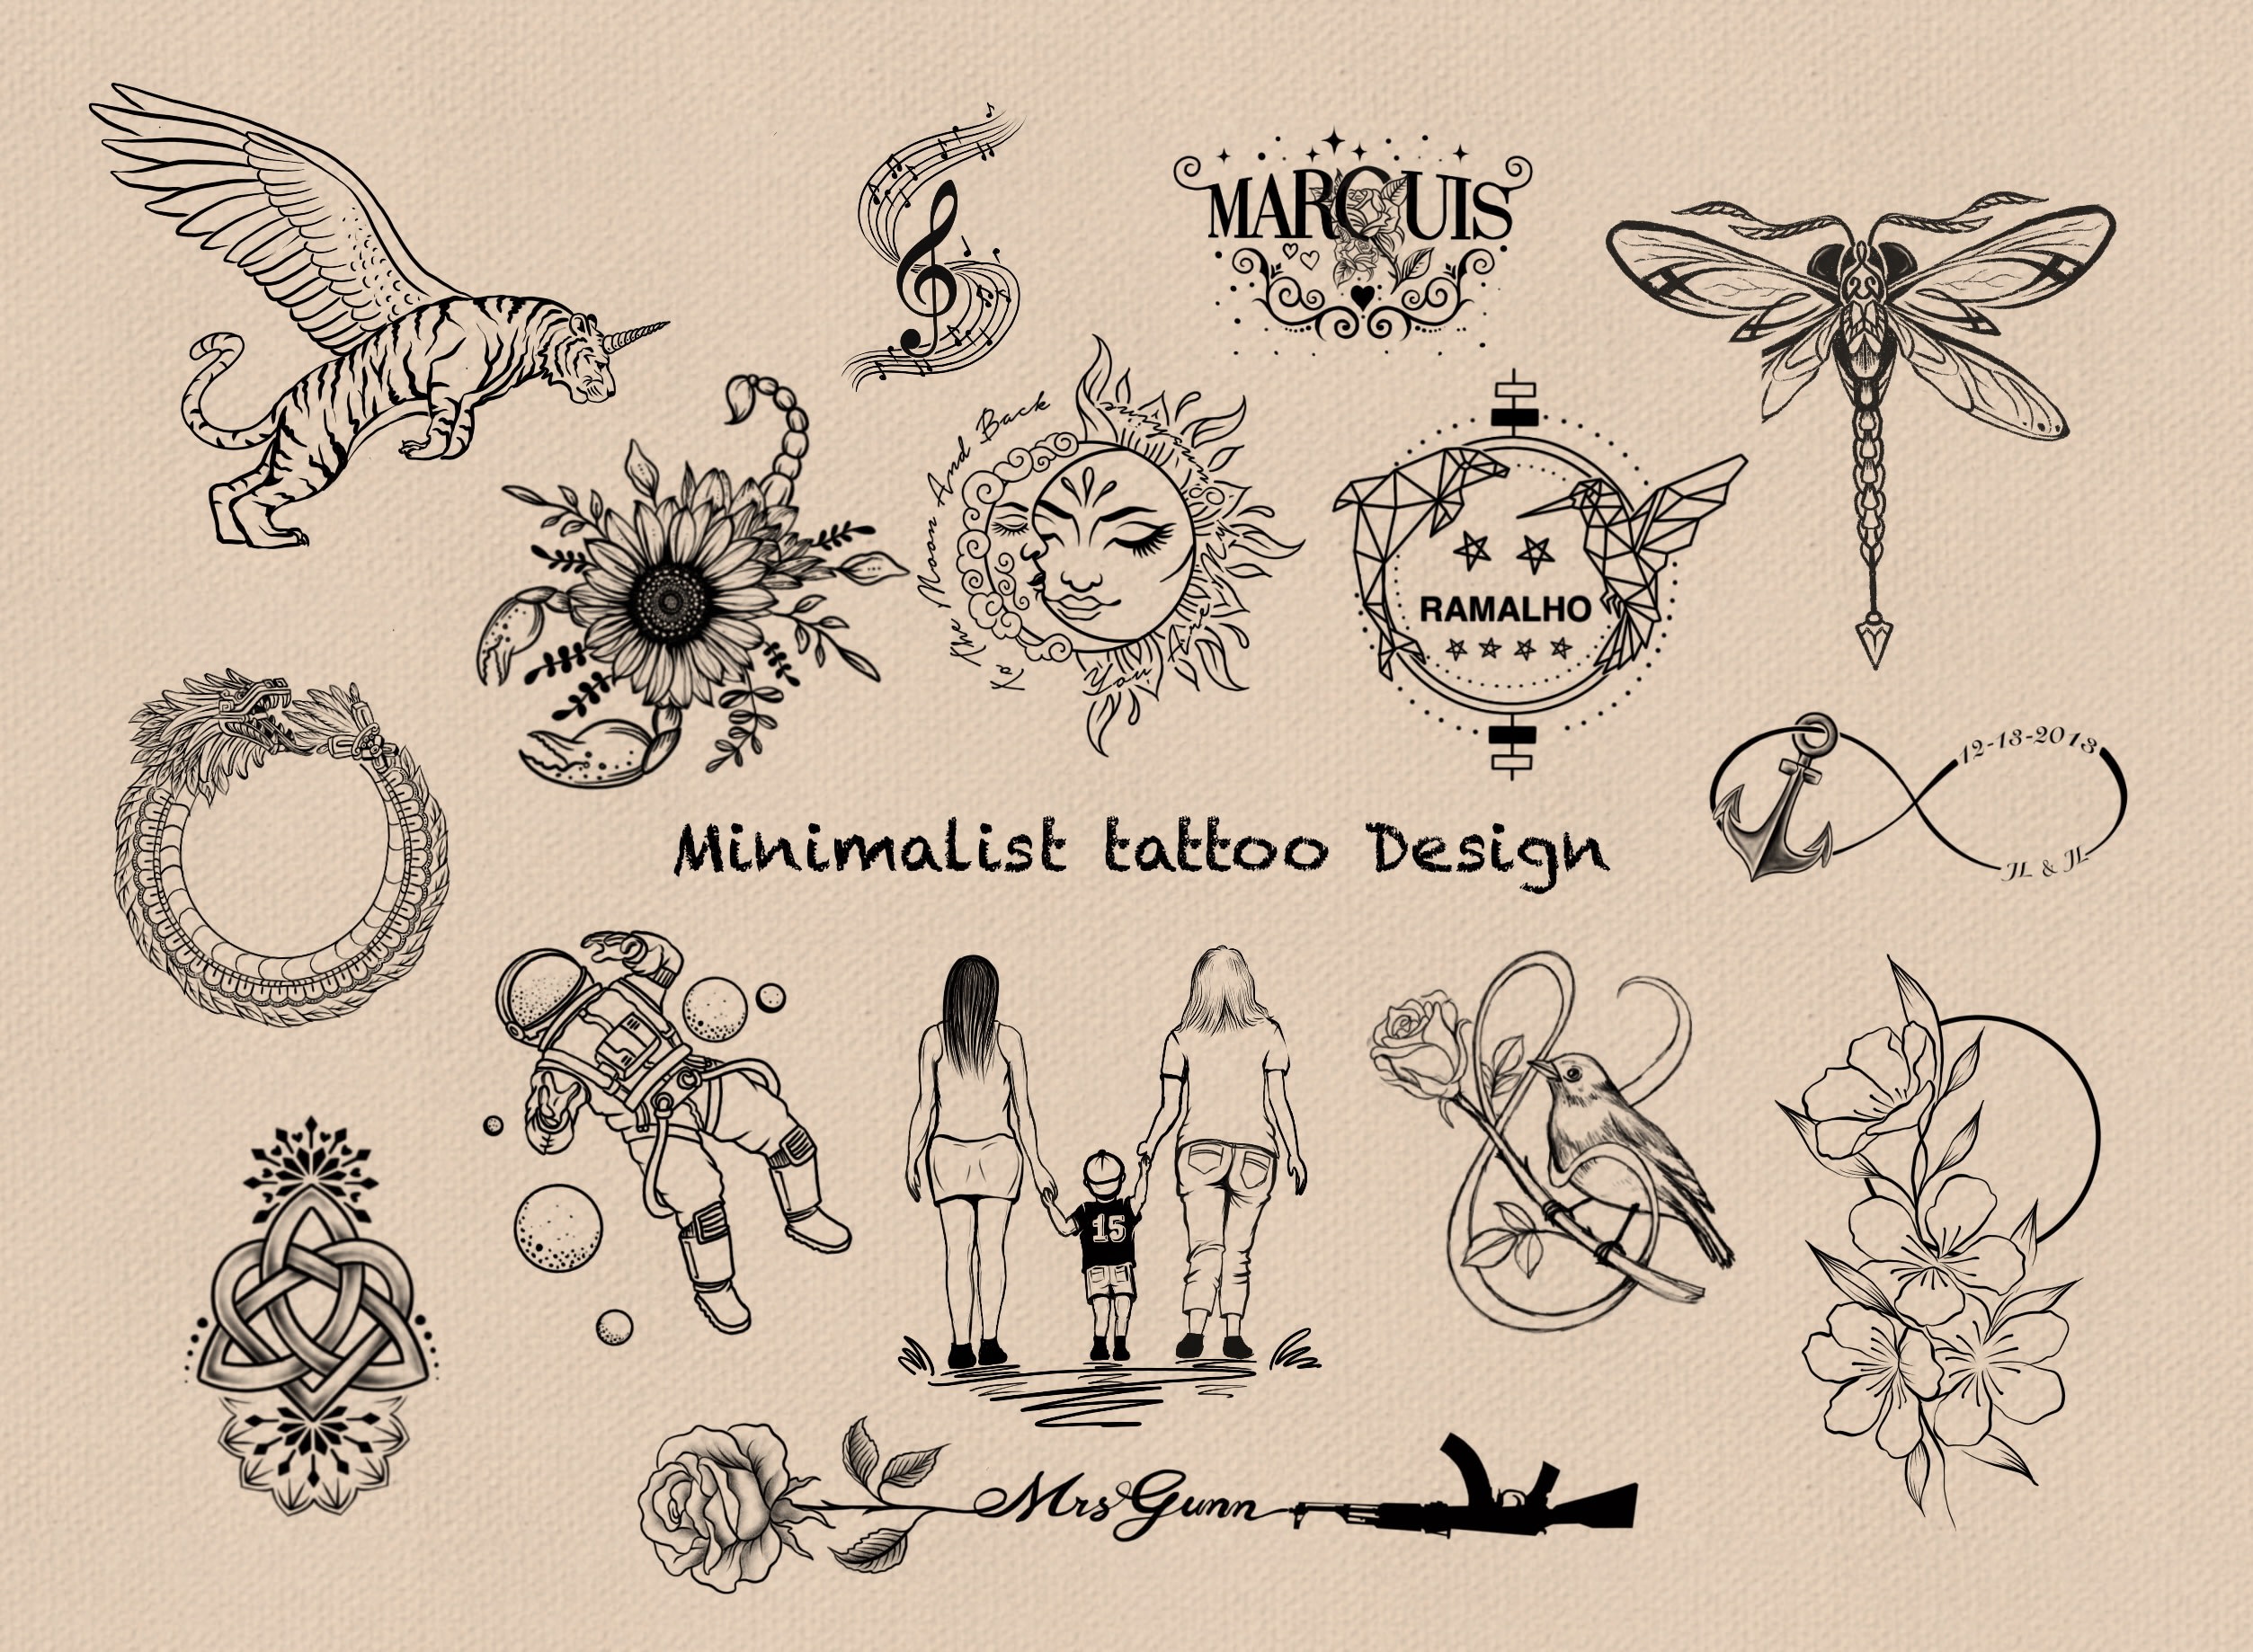 Minimalist Inner Arm Tattoo Ideas